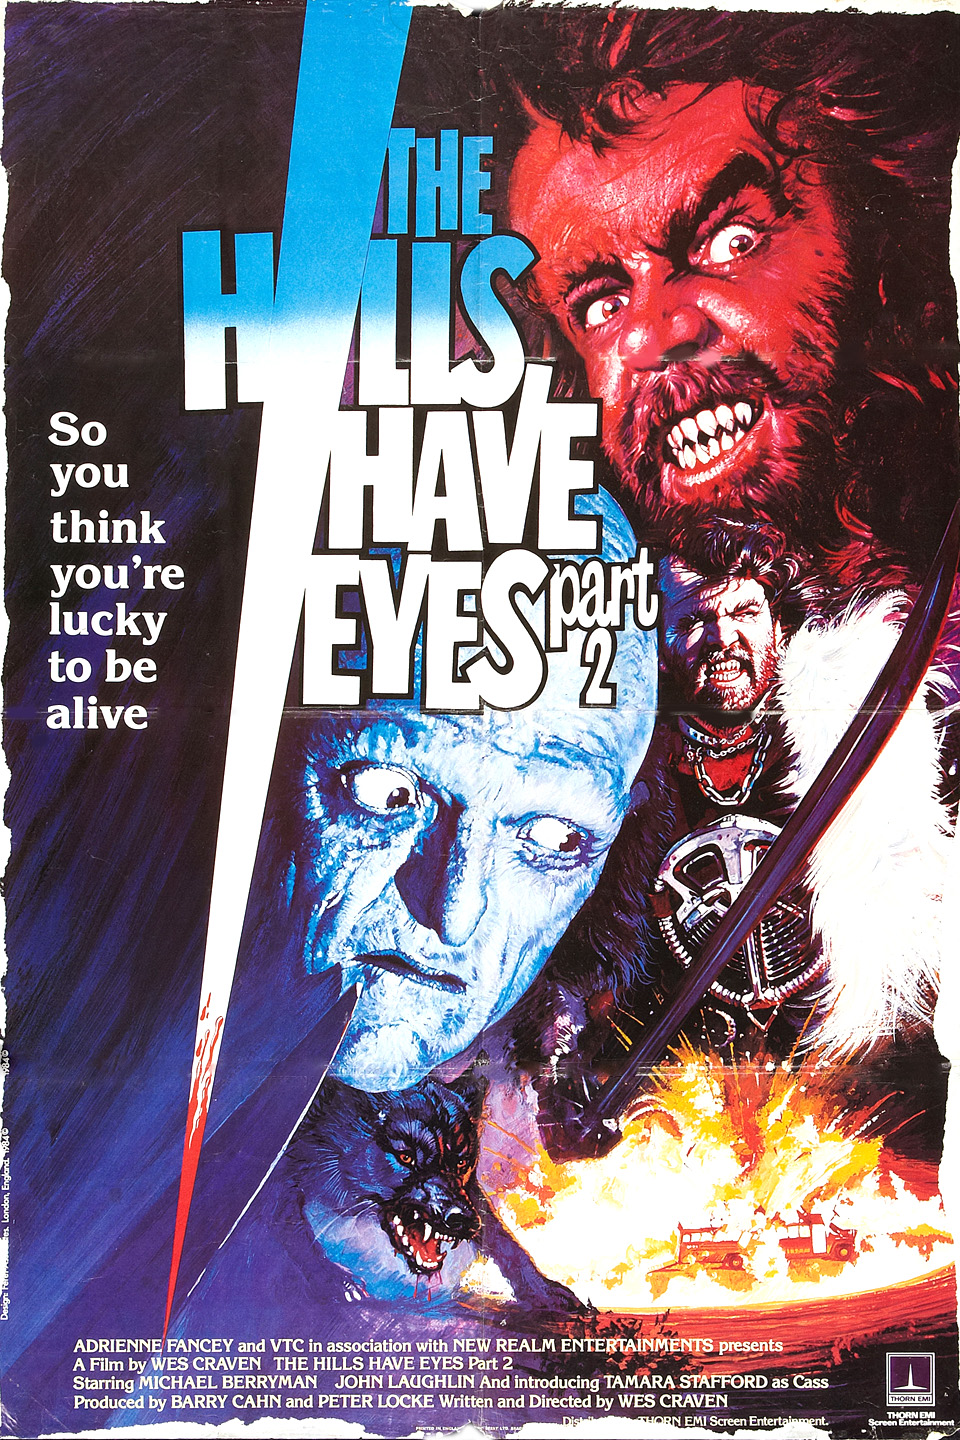 Hills Have Eyes Full Movie